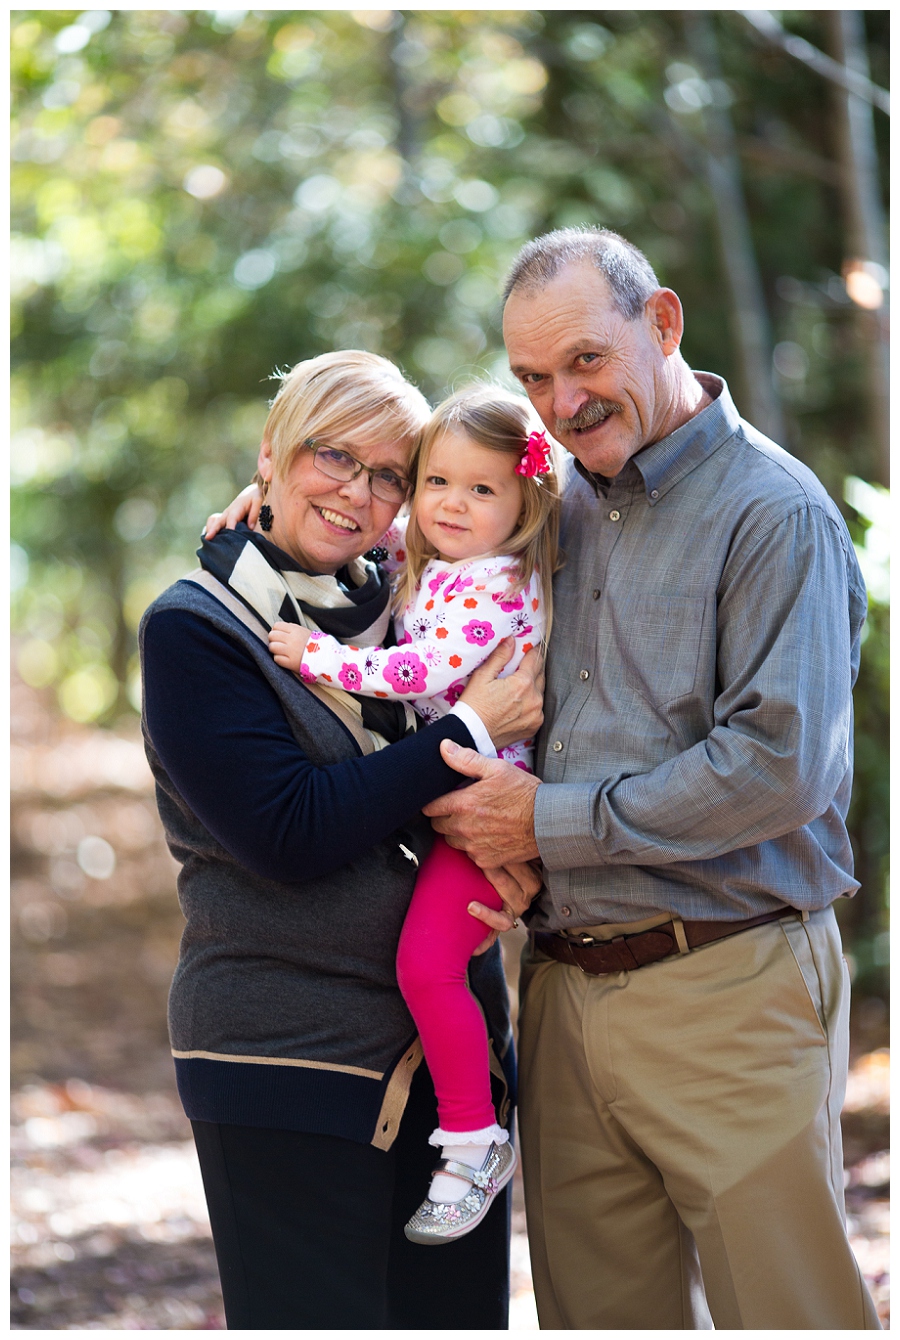 Chesapeake Family Photographer ~Kacie, Don & Molly...and Kacies Parents, too!~